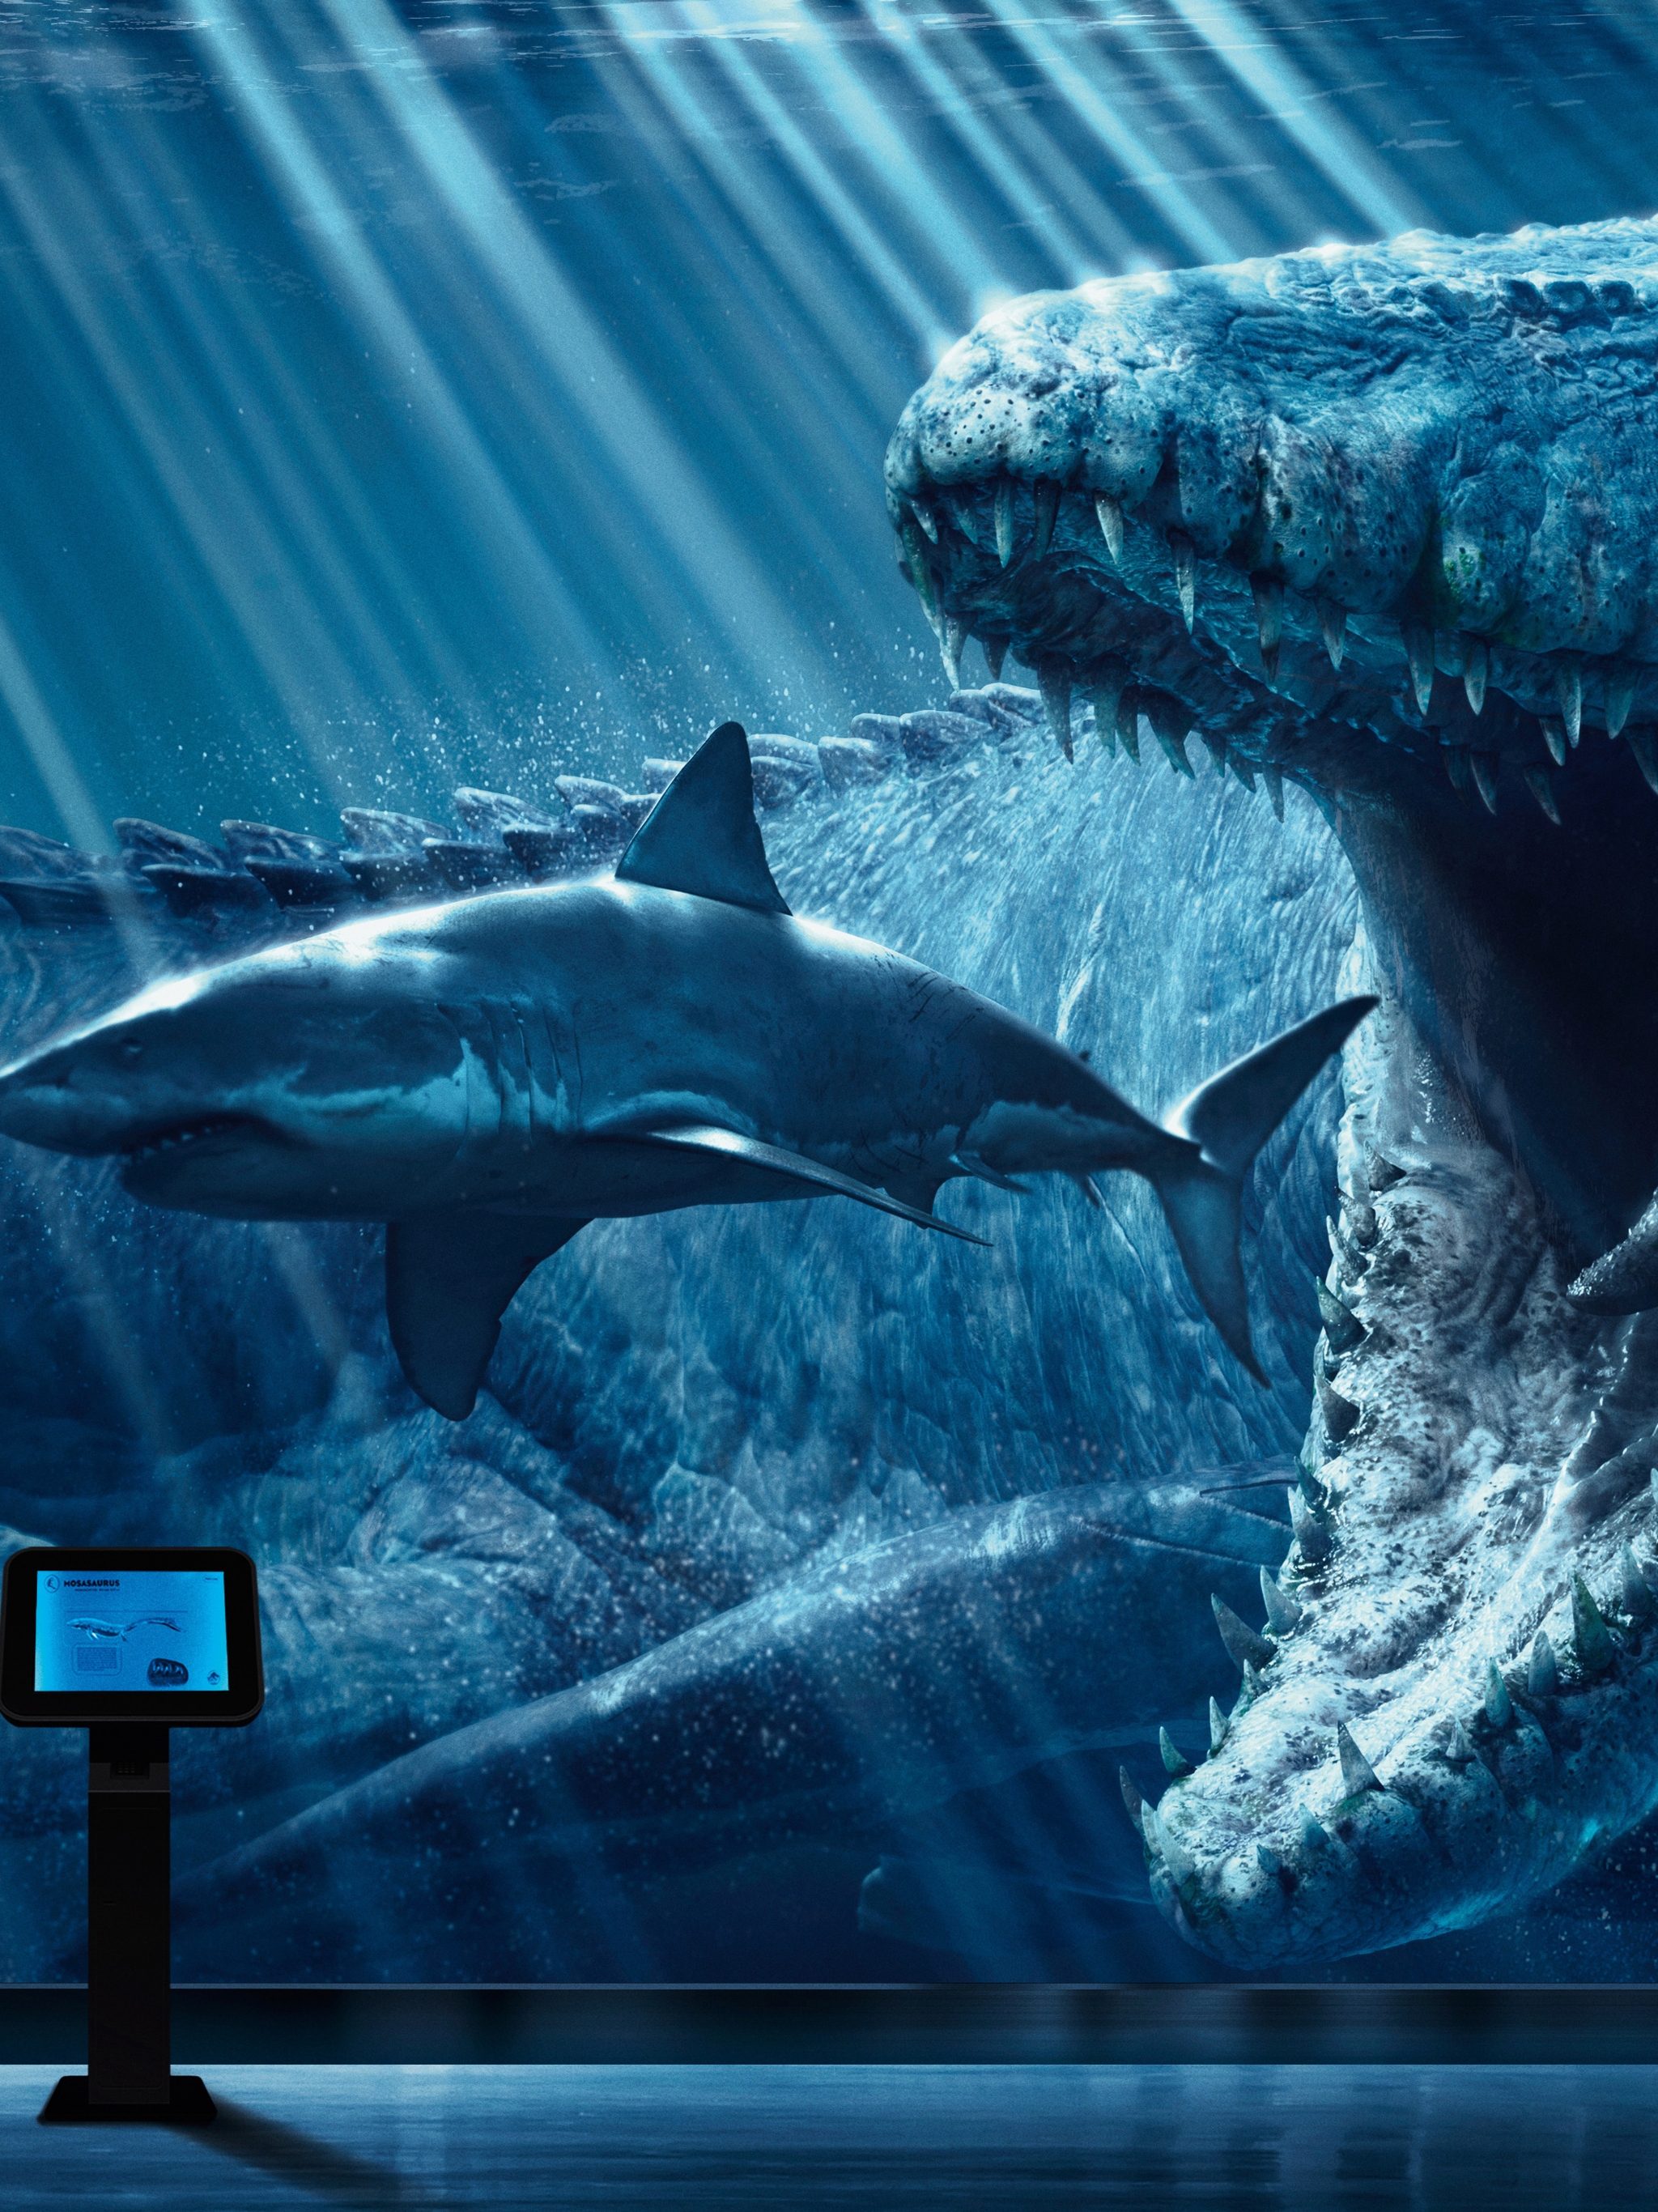 Image: Aquarium, dinosaur, shark, boy, information desk, hunting, predator, Mosasaur, Jurassic World, the movie